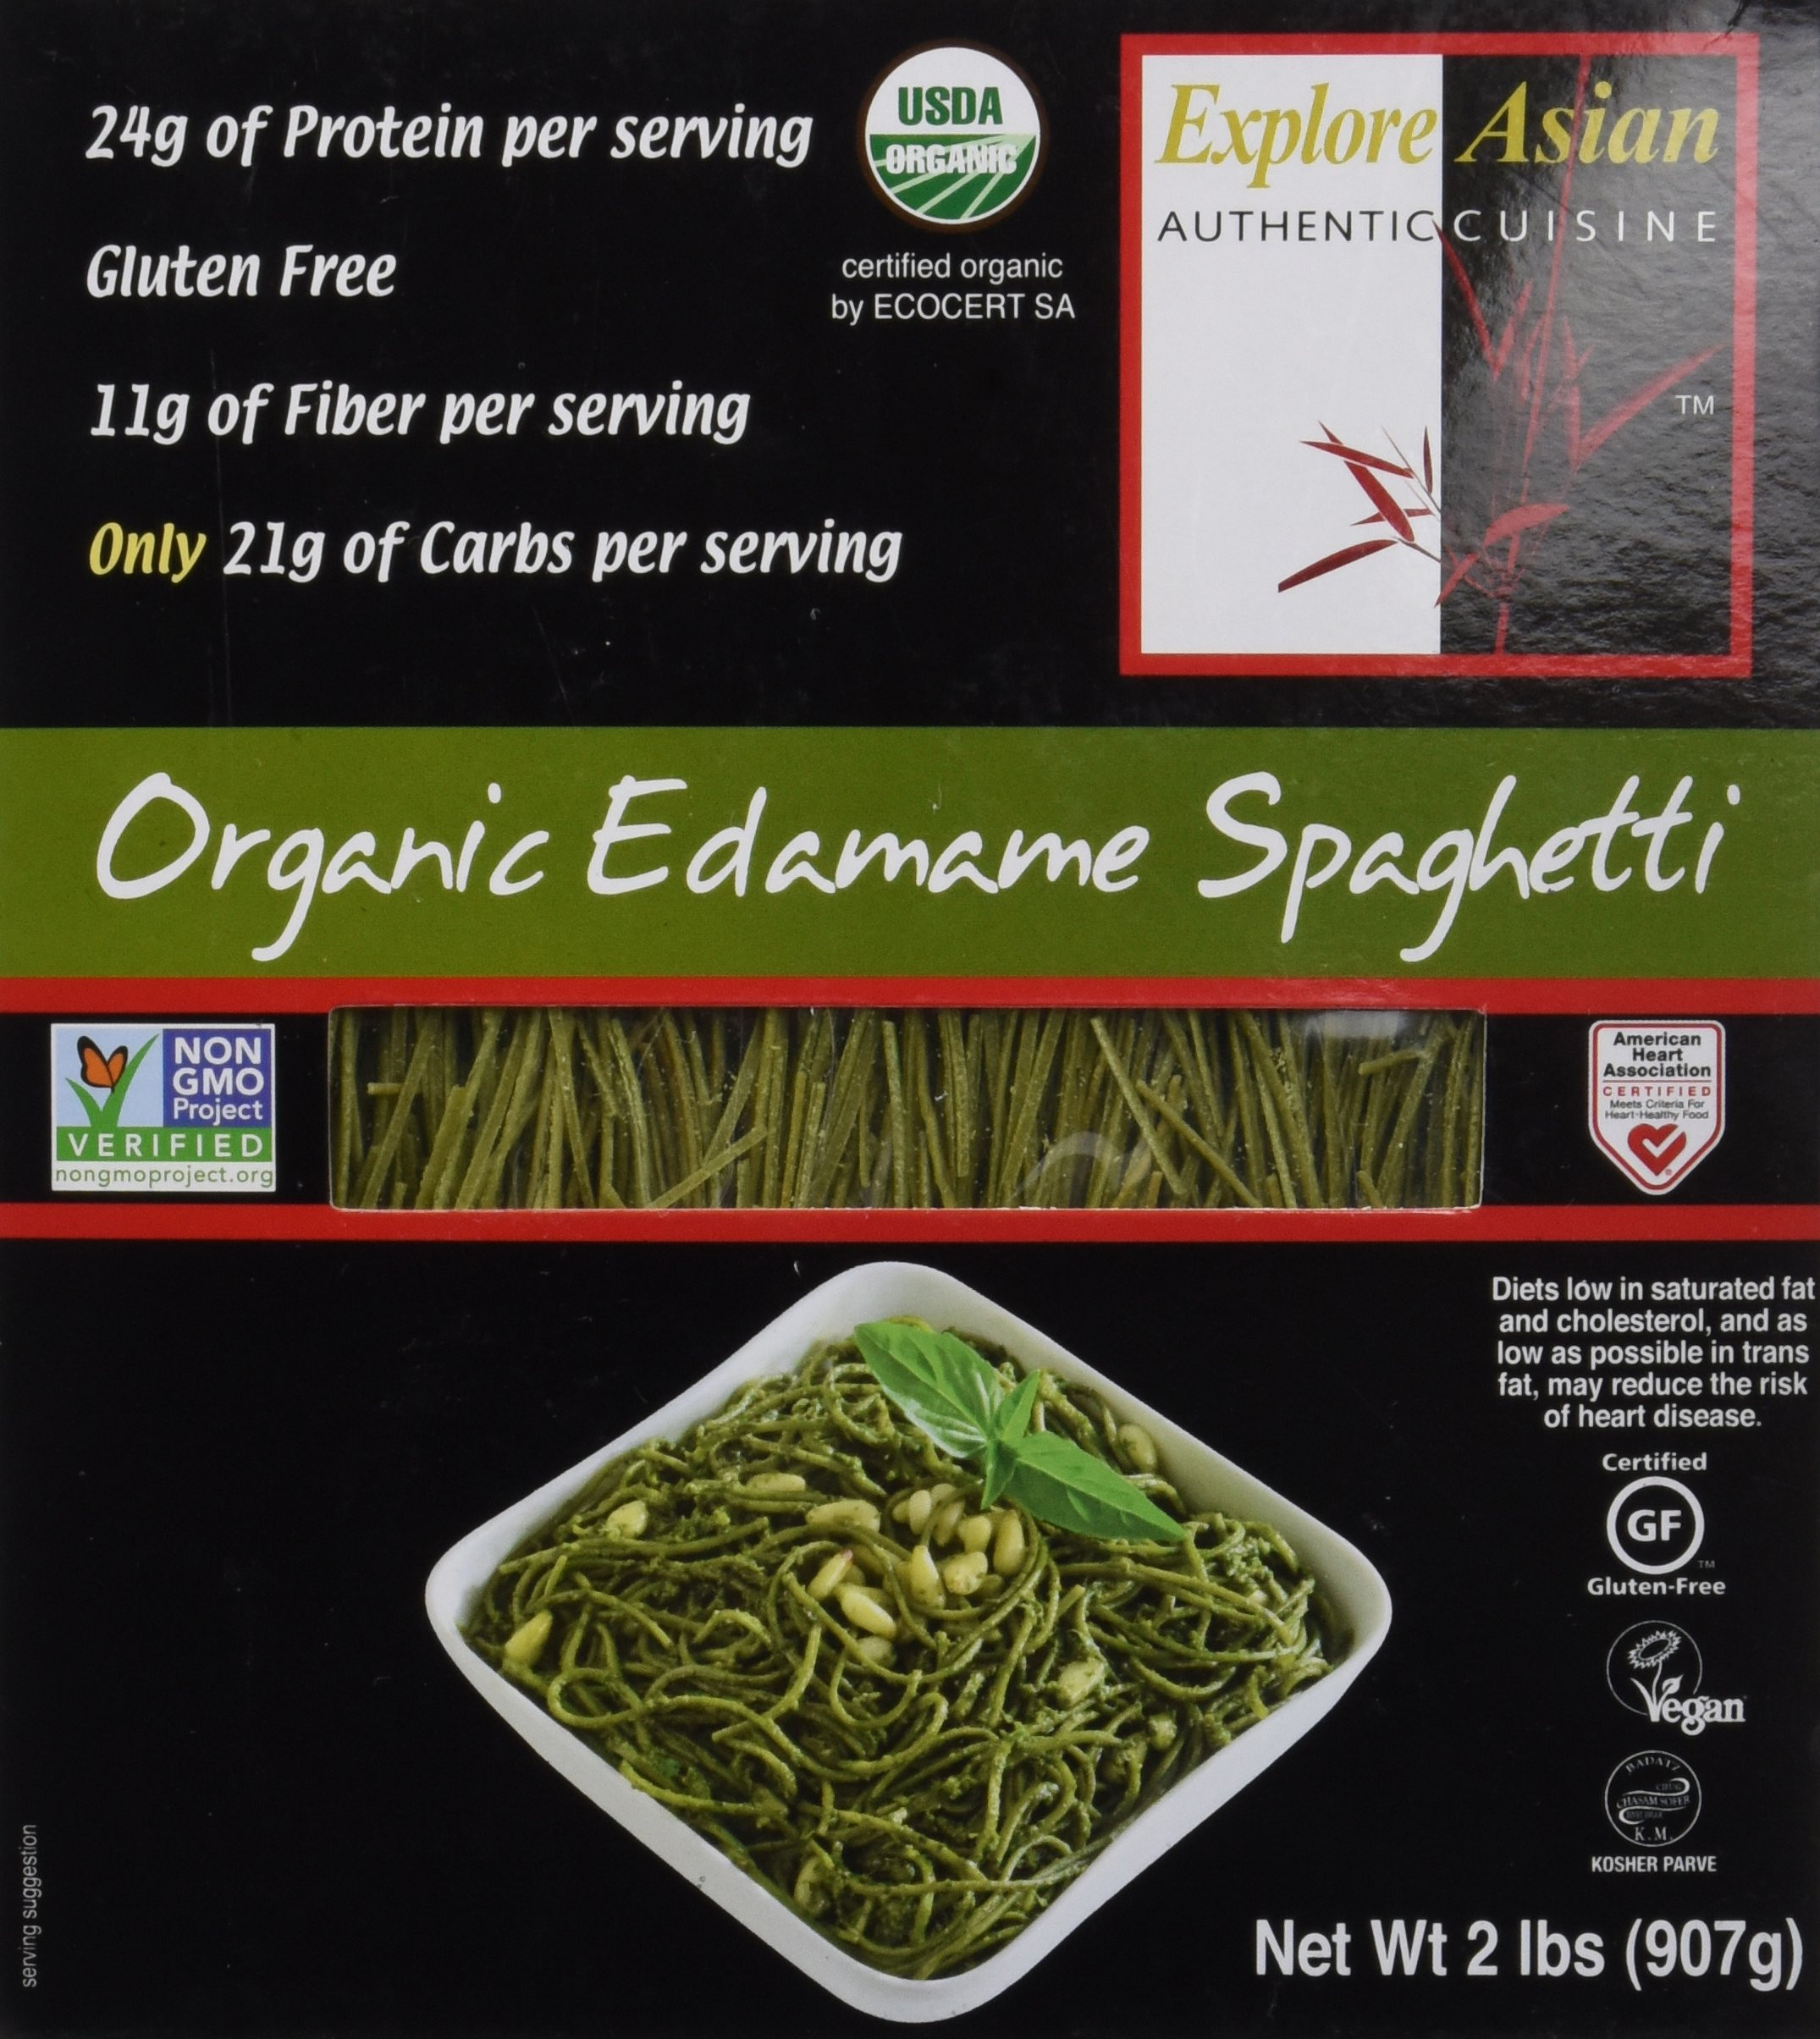 Organic Edamame Spaghetti Costco
 2 pound box 18 servings Gluten free vegan kosher